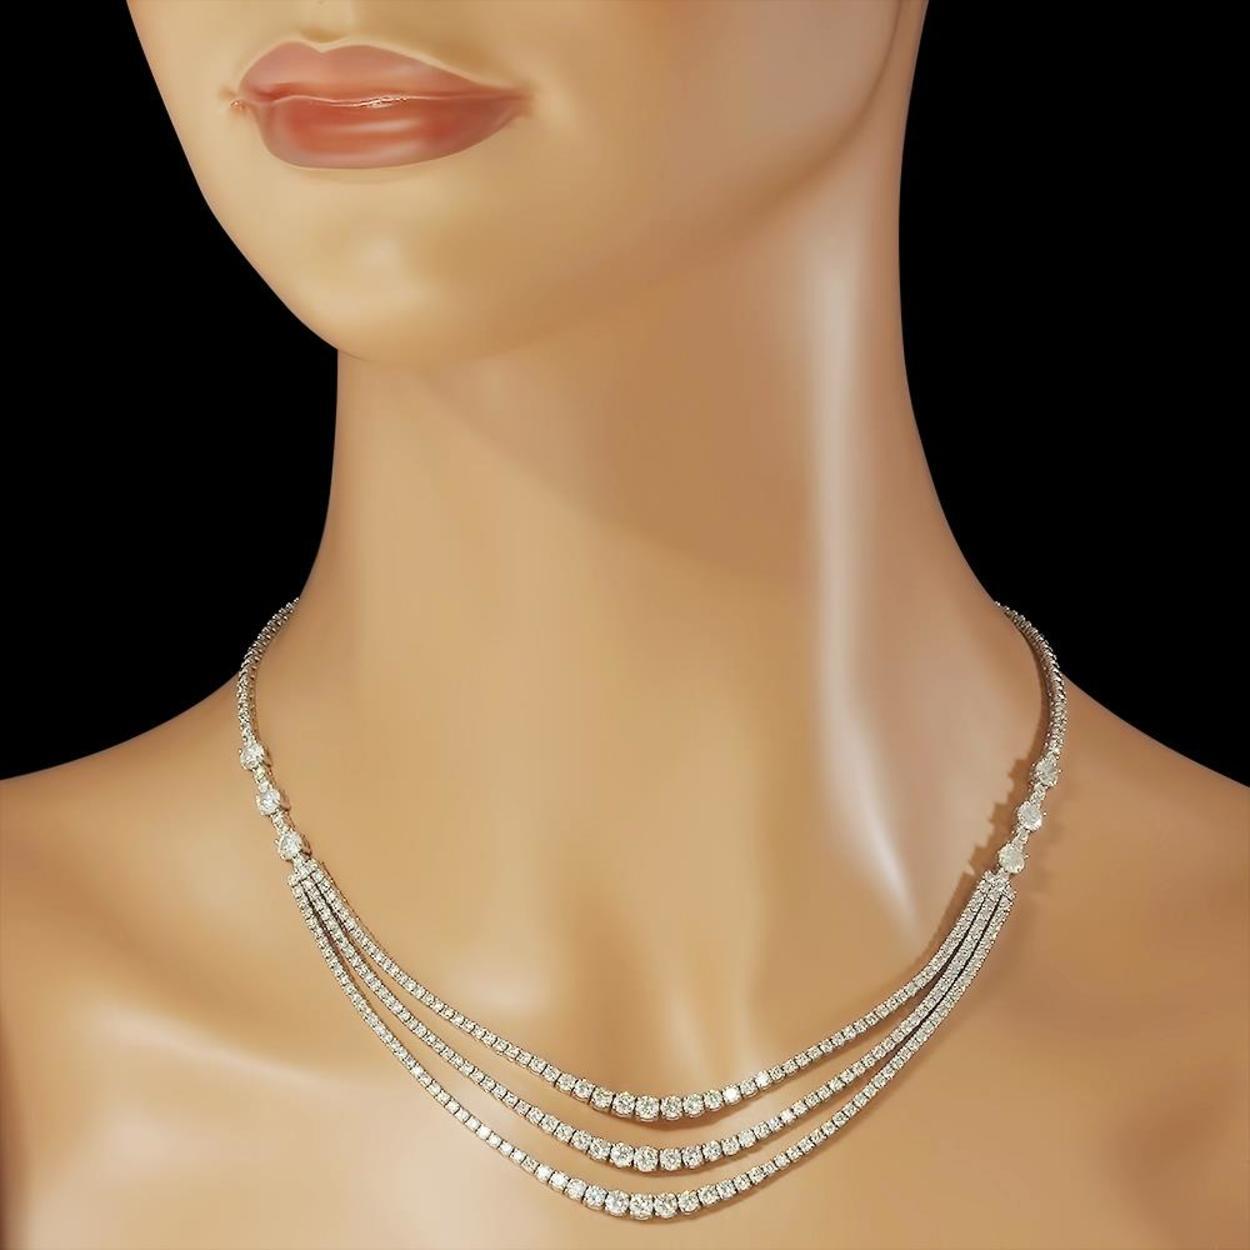 14K Gold 11.98ct Diamond Necklace